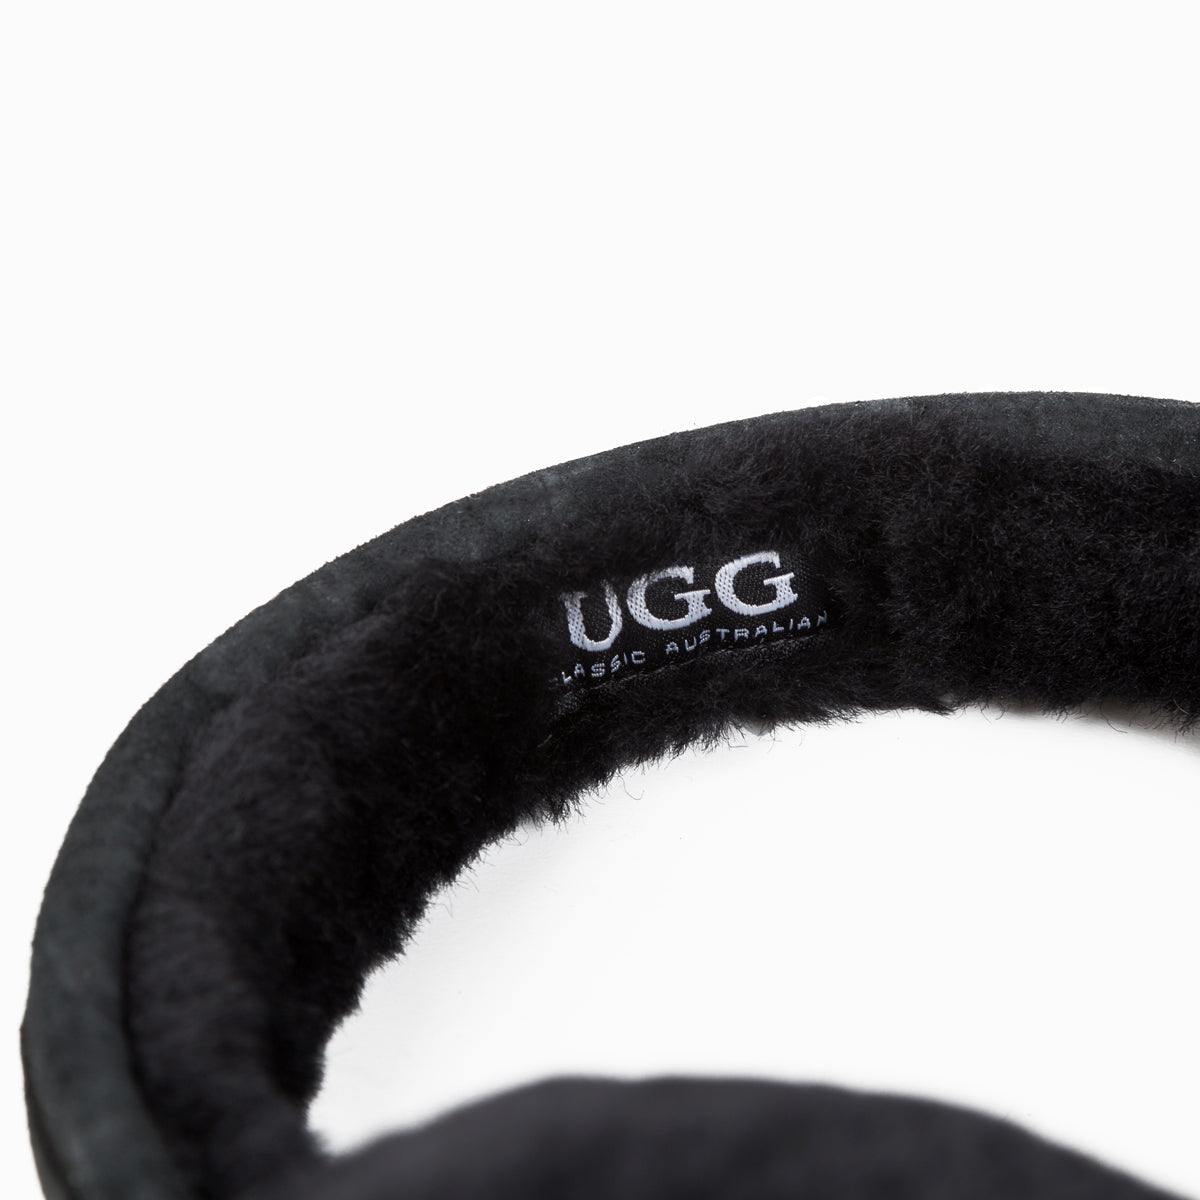 Ugg Sheepskin Earmuff-Earmuffs-PEROZ Accessories